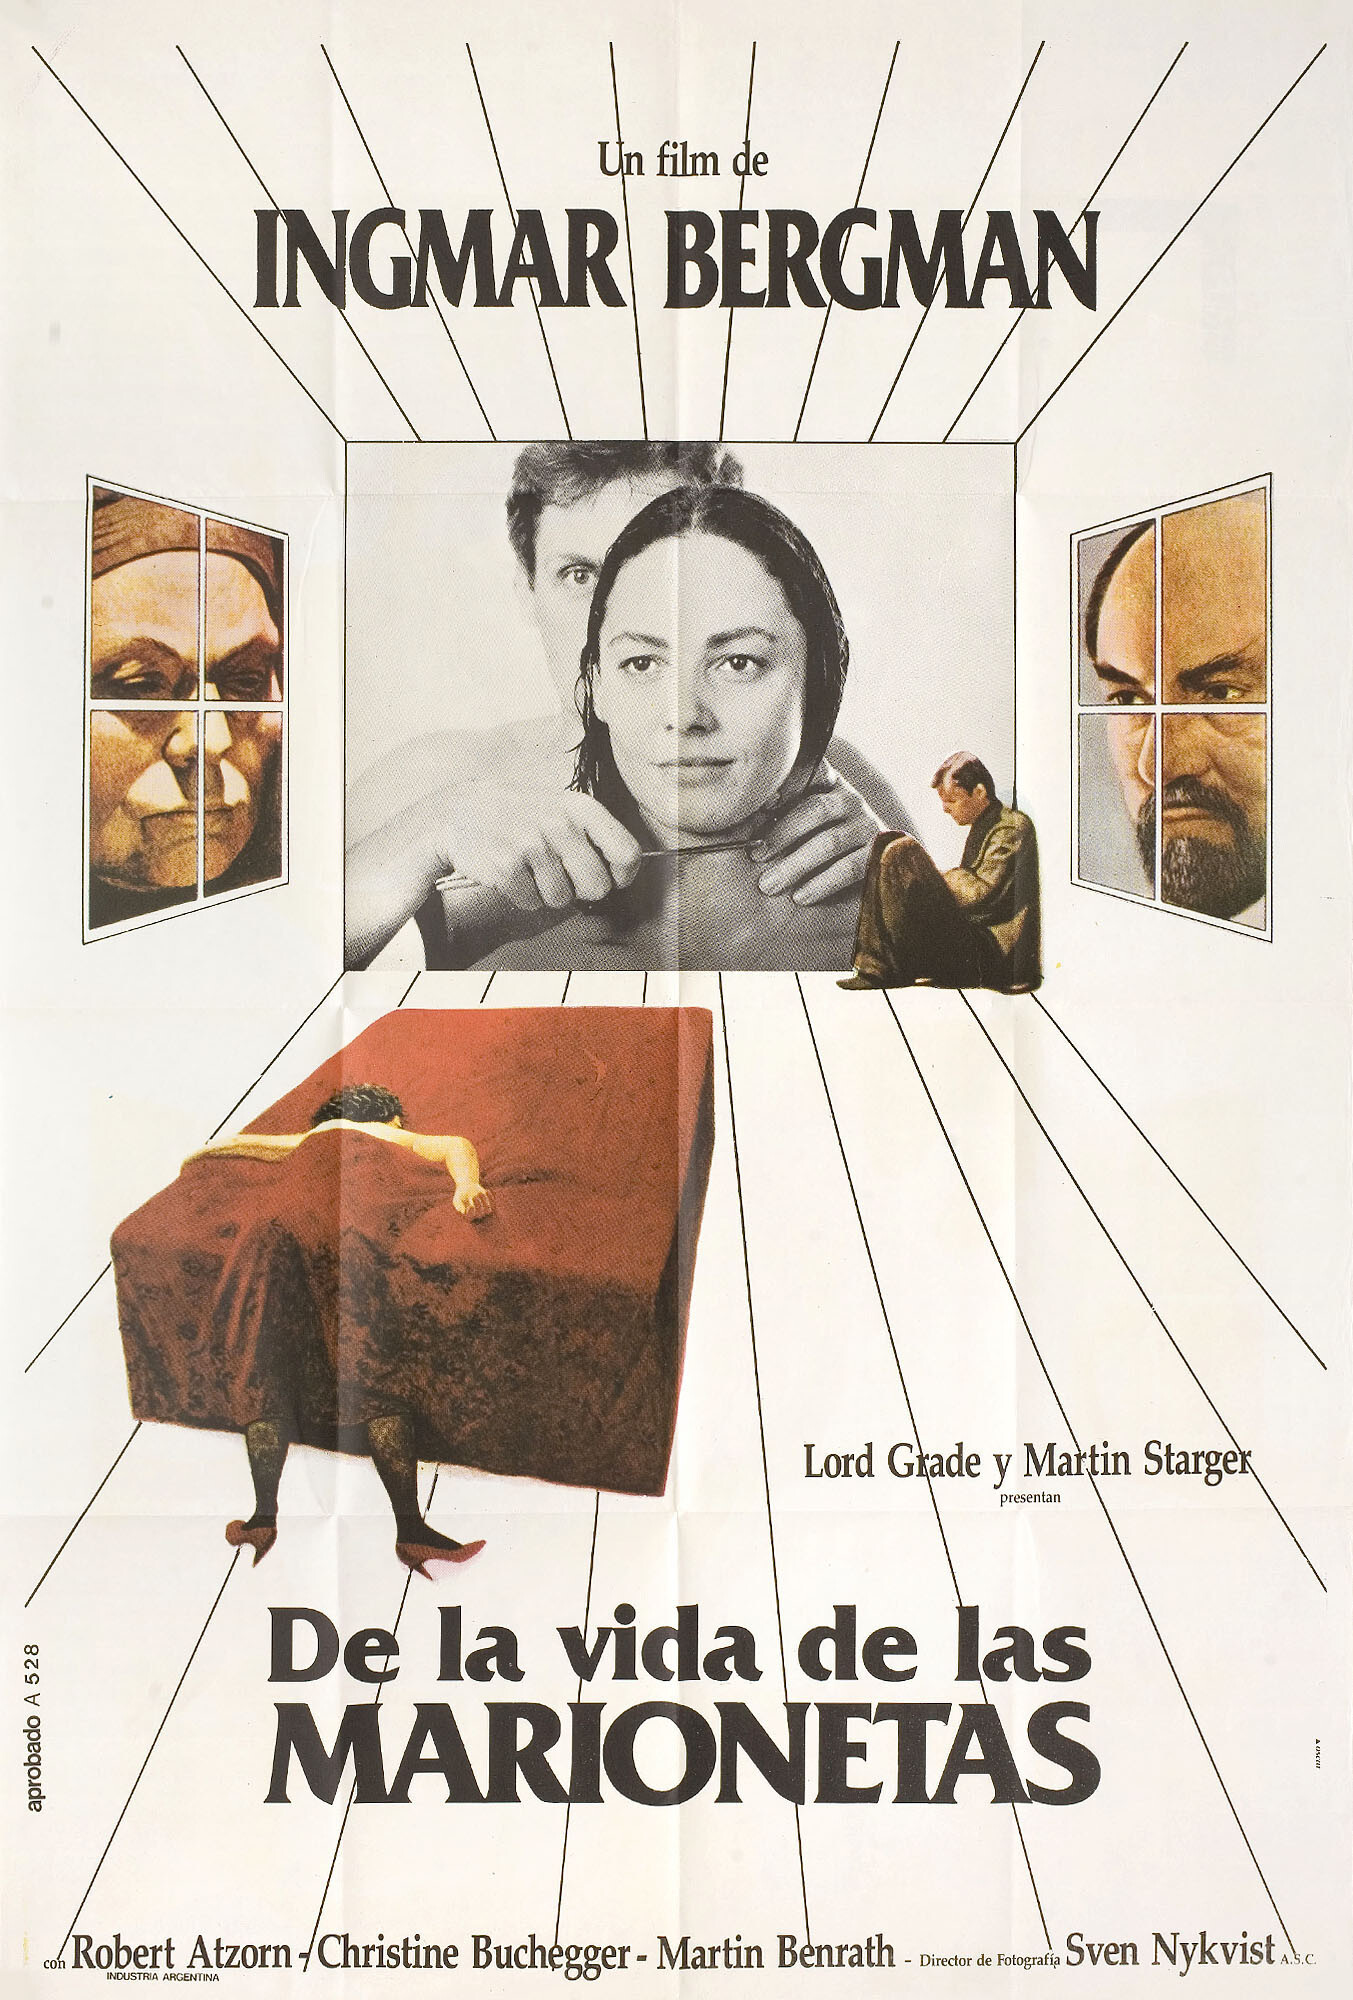 Из жизни марионеток (From the Life of the Marionettes, 1980), режиссёр Ингмар Бергман, аргентинский постер к фильму (графический дизайн, 1980 год)